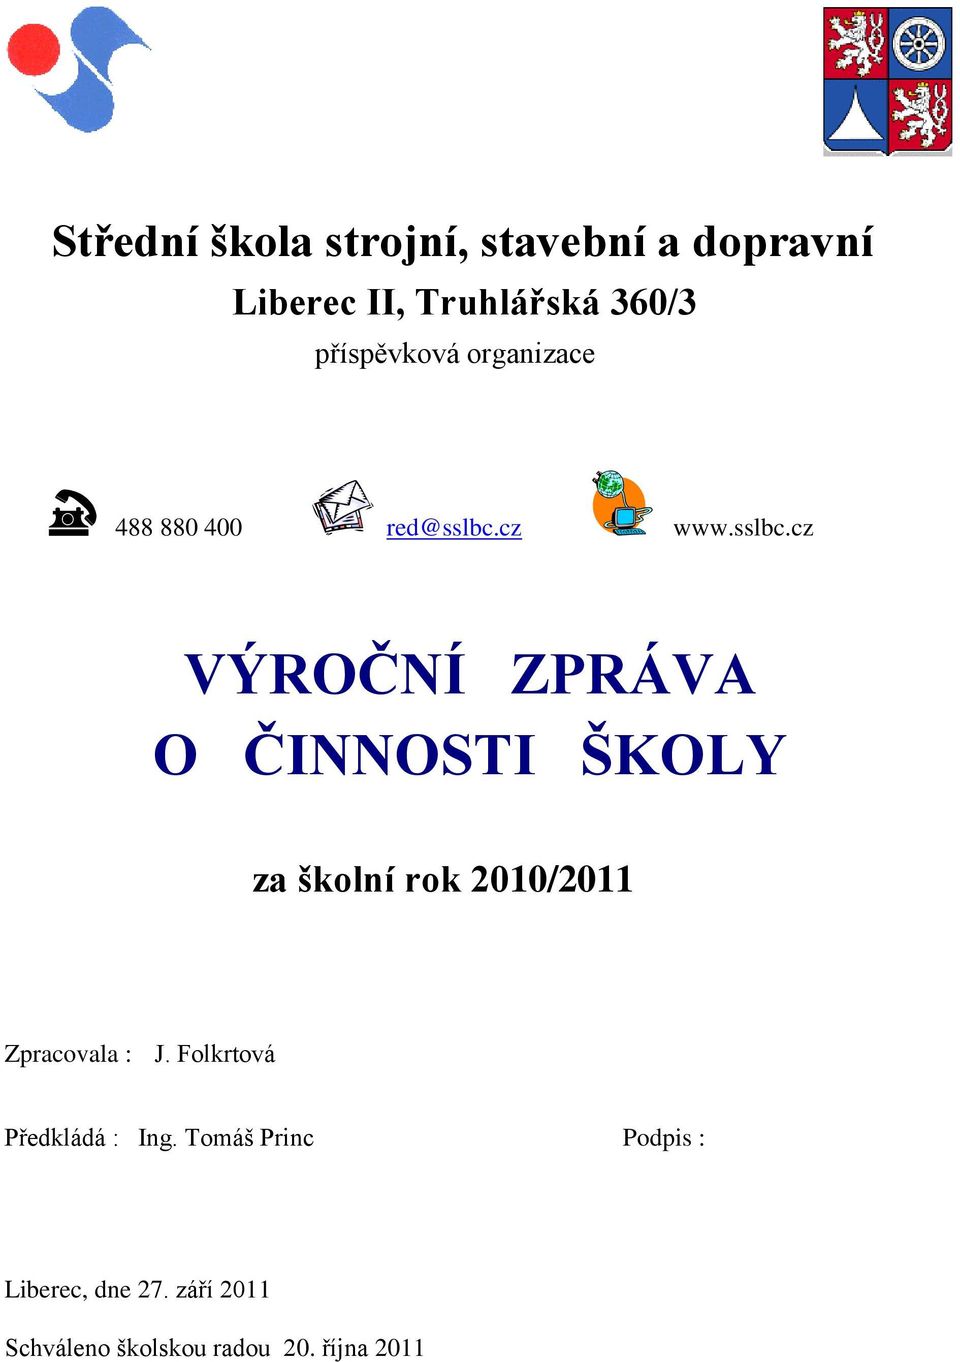 cz www.sslbc.